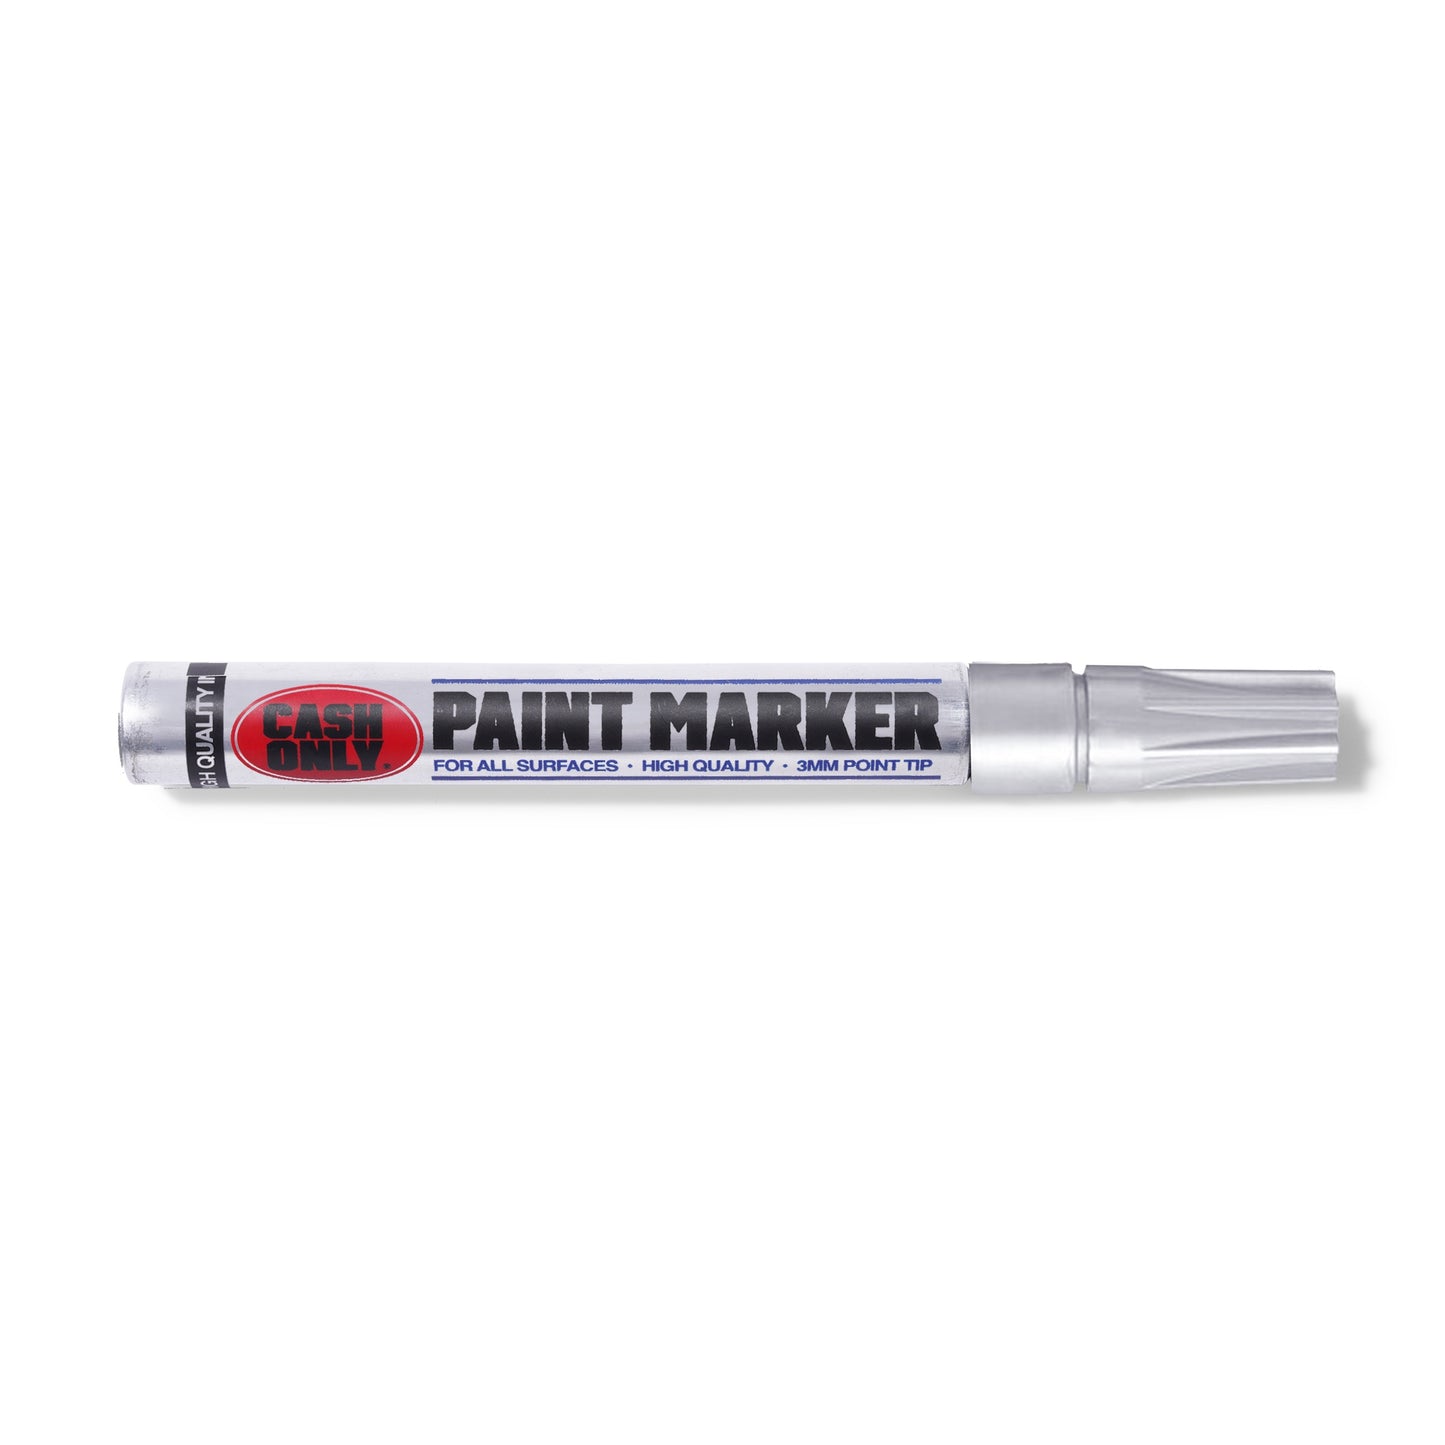 Cash Only - Paint Marker - Chrome